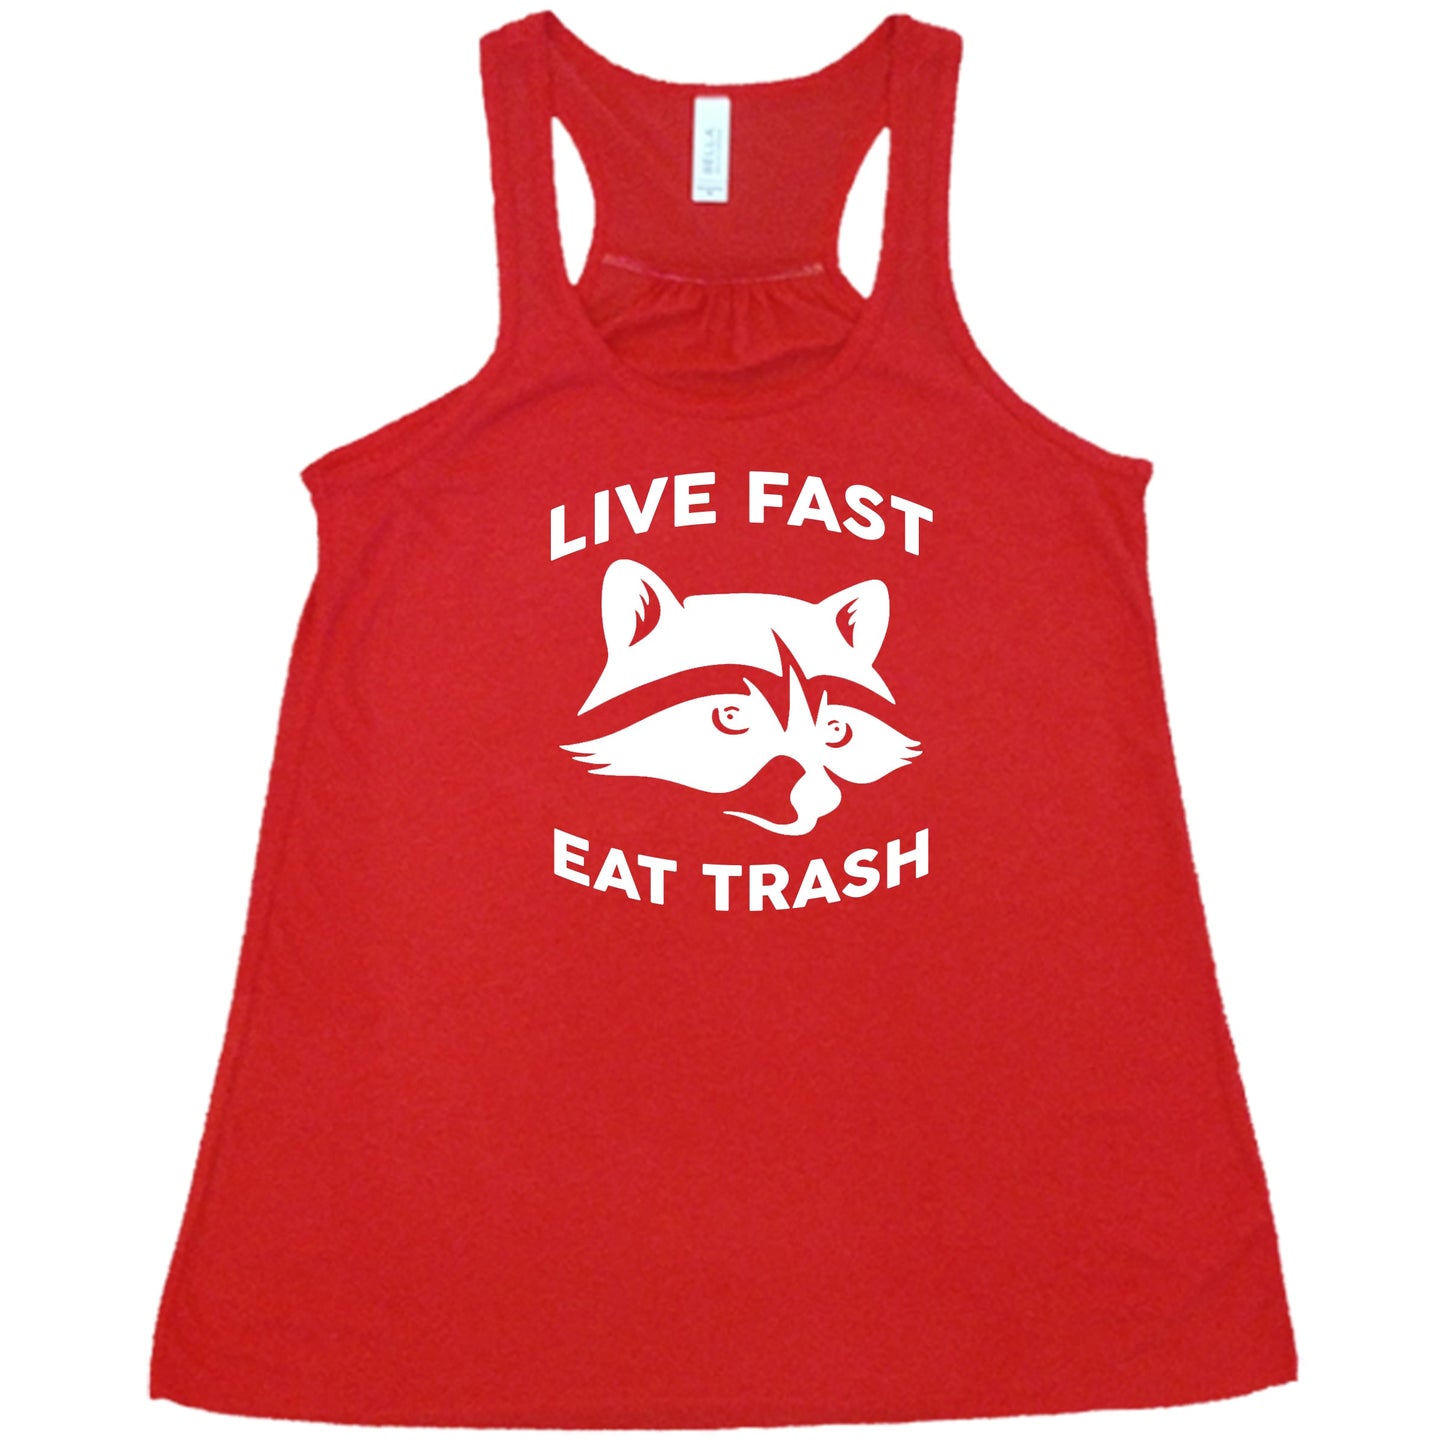 Live Fast Eat Trash Shirt